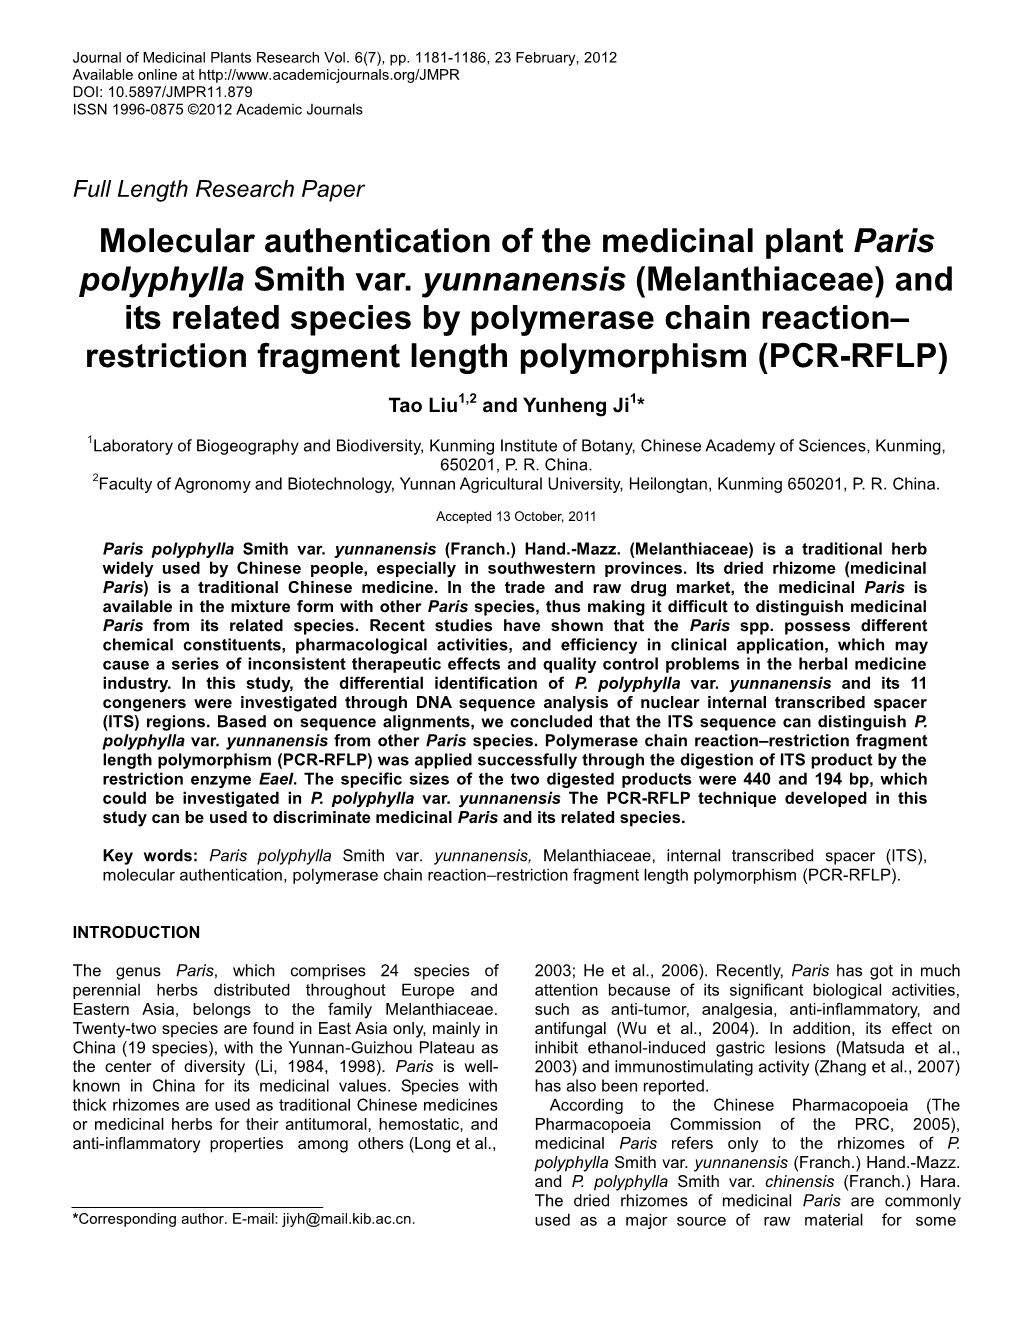 Molecular Authentication of the Medicinal Plant Paris Polyphylla Smith Var